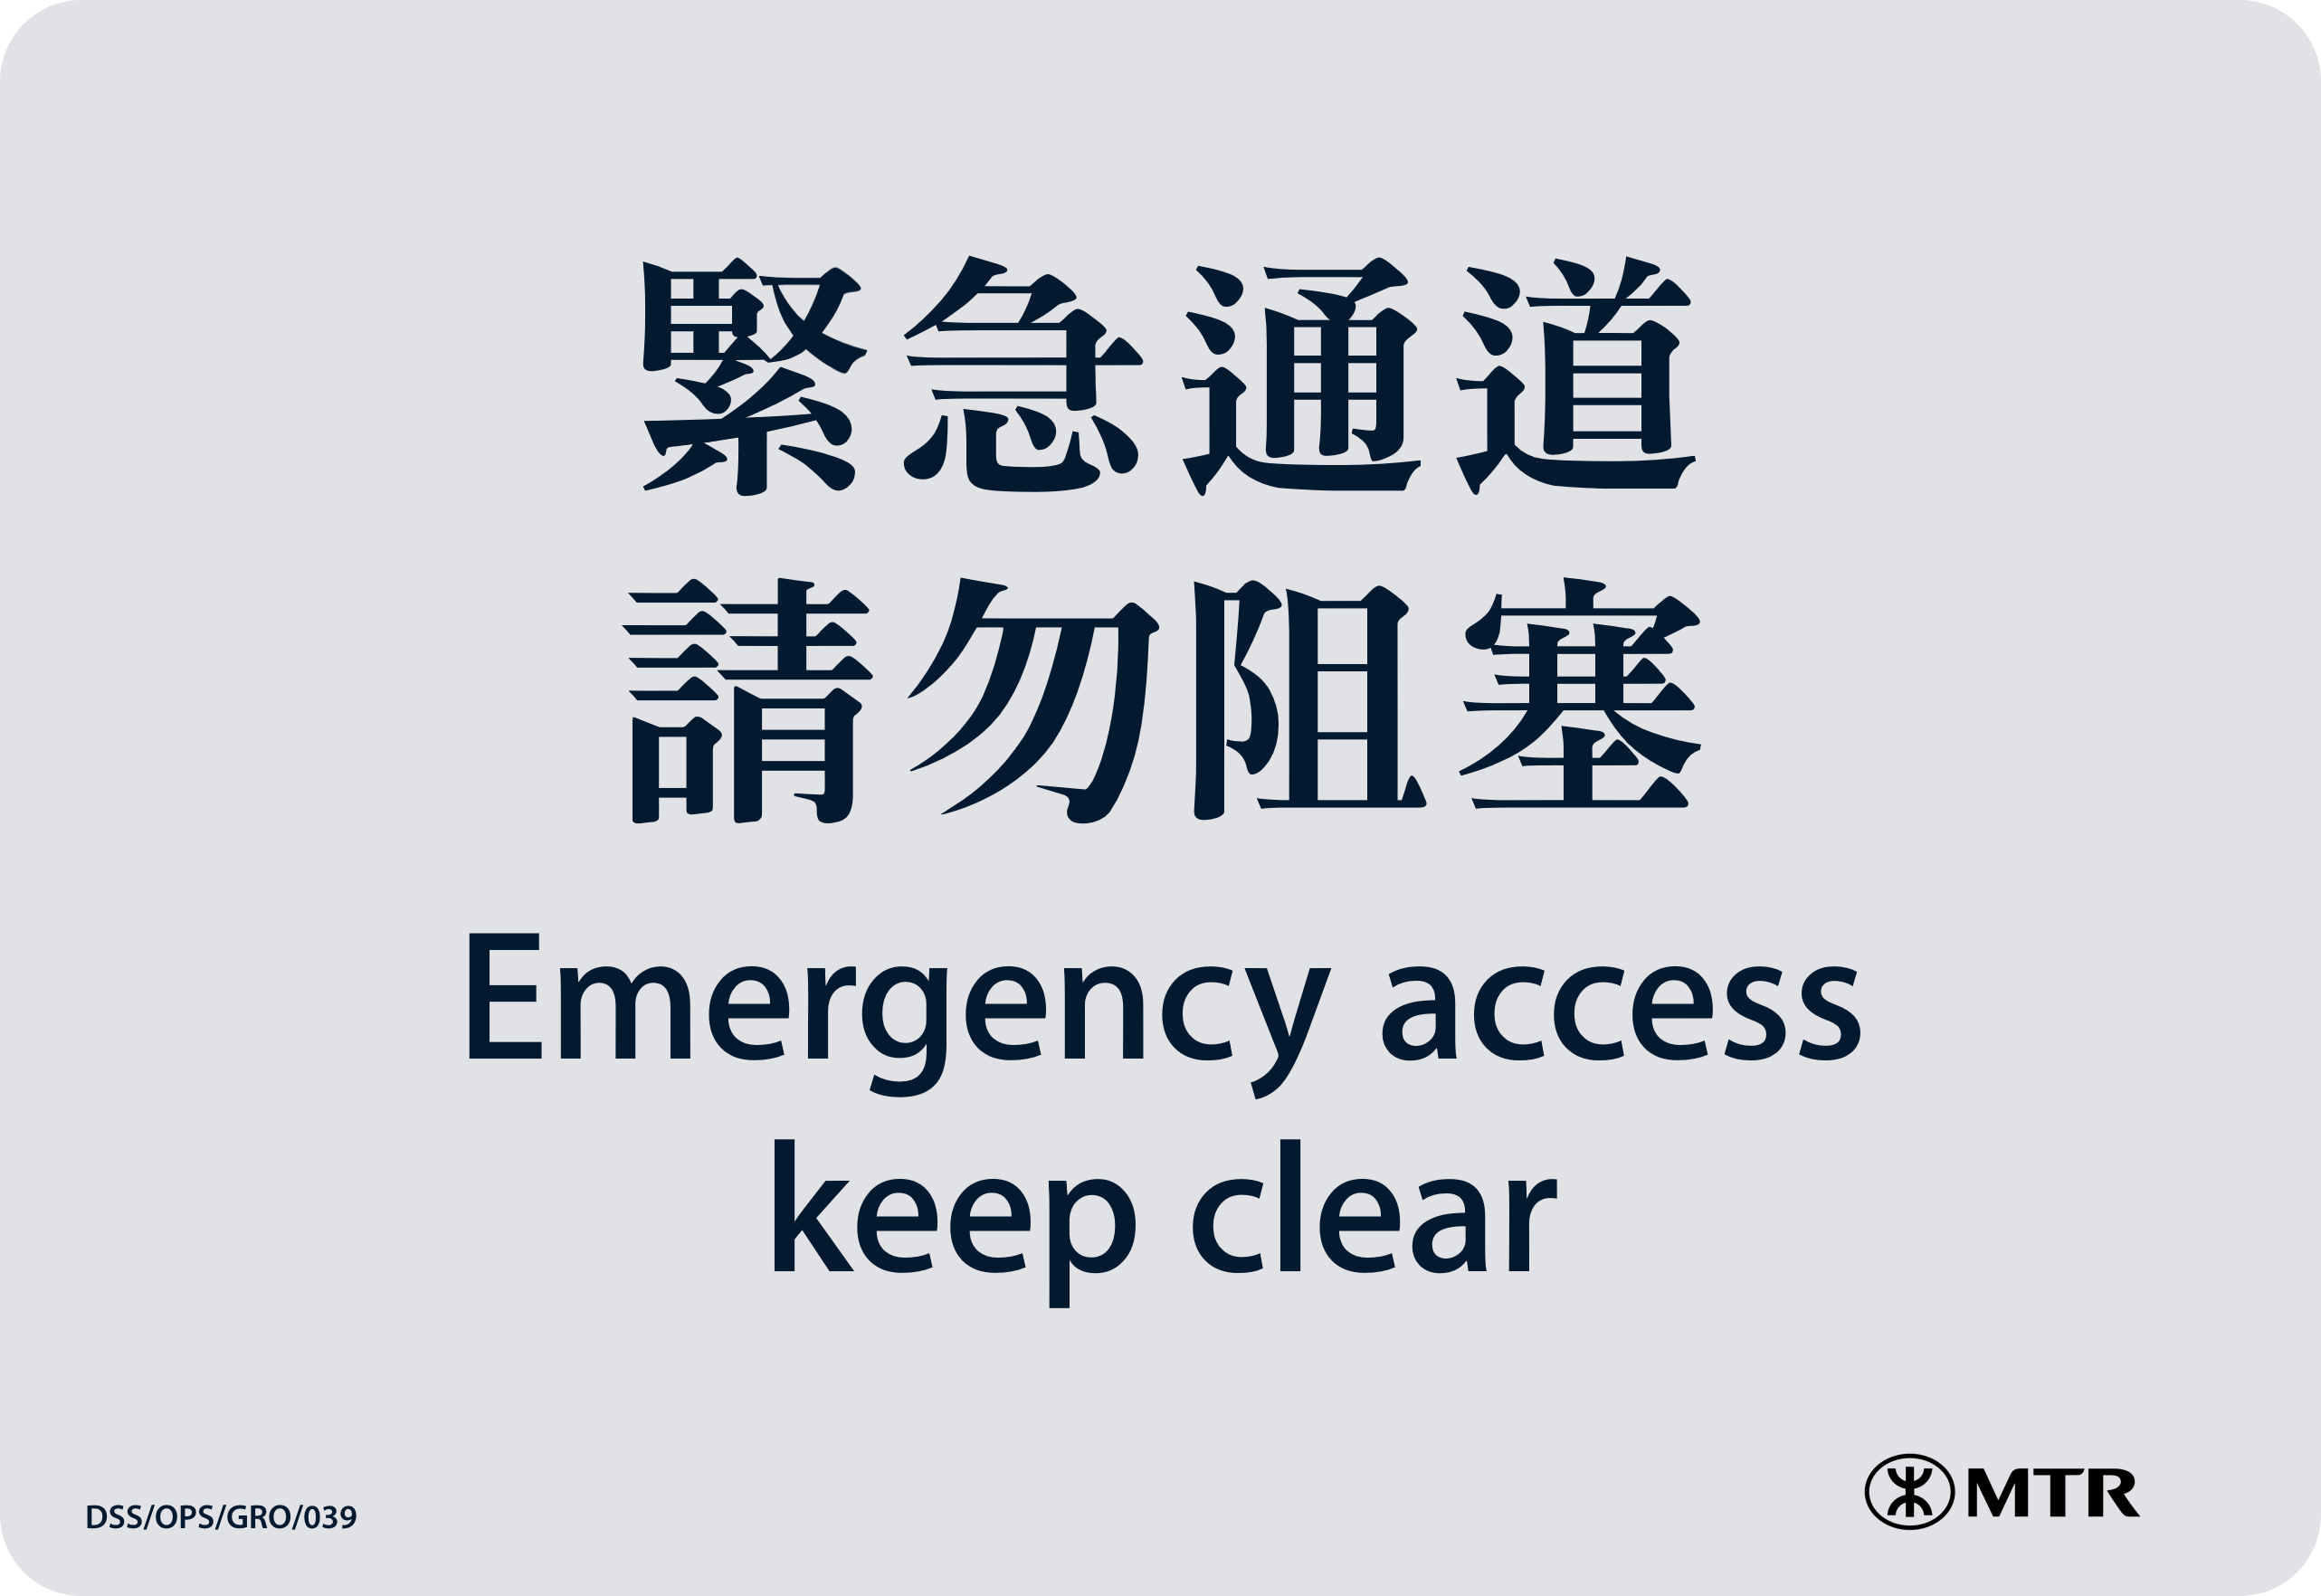 MTR 'Emergency access keep clear'